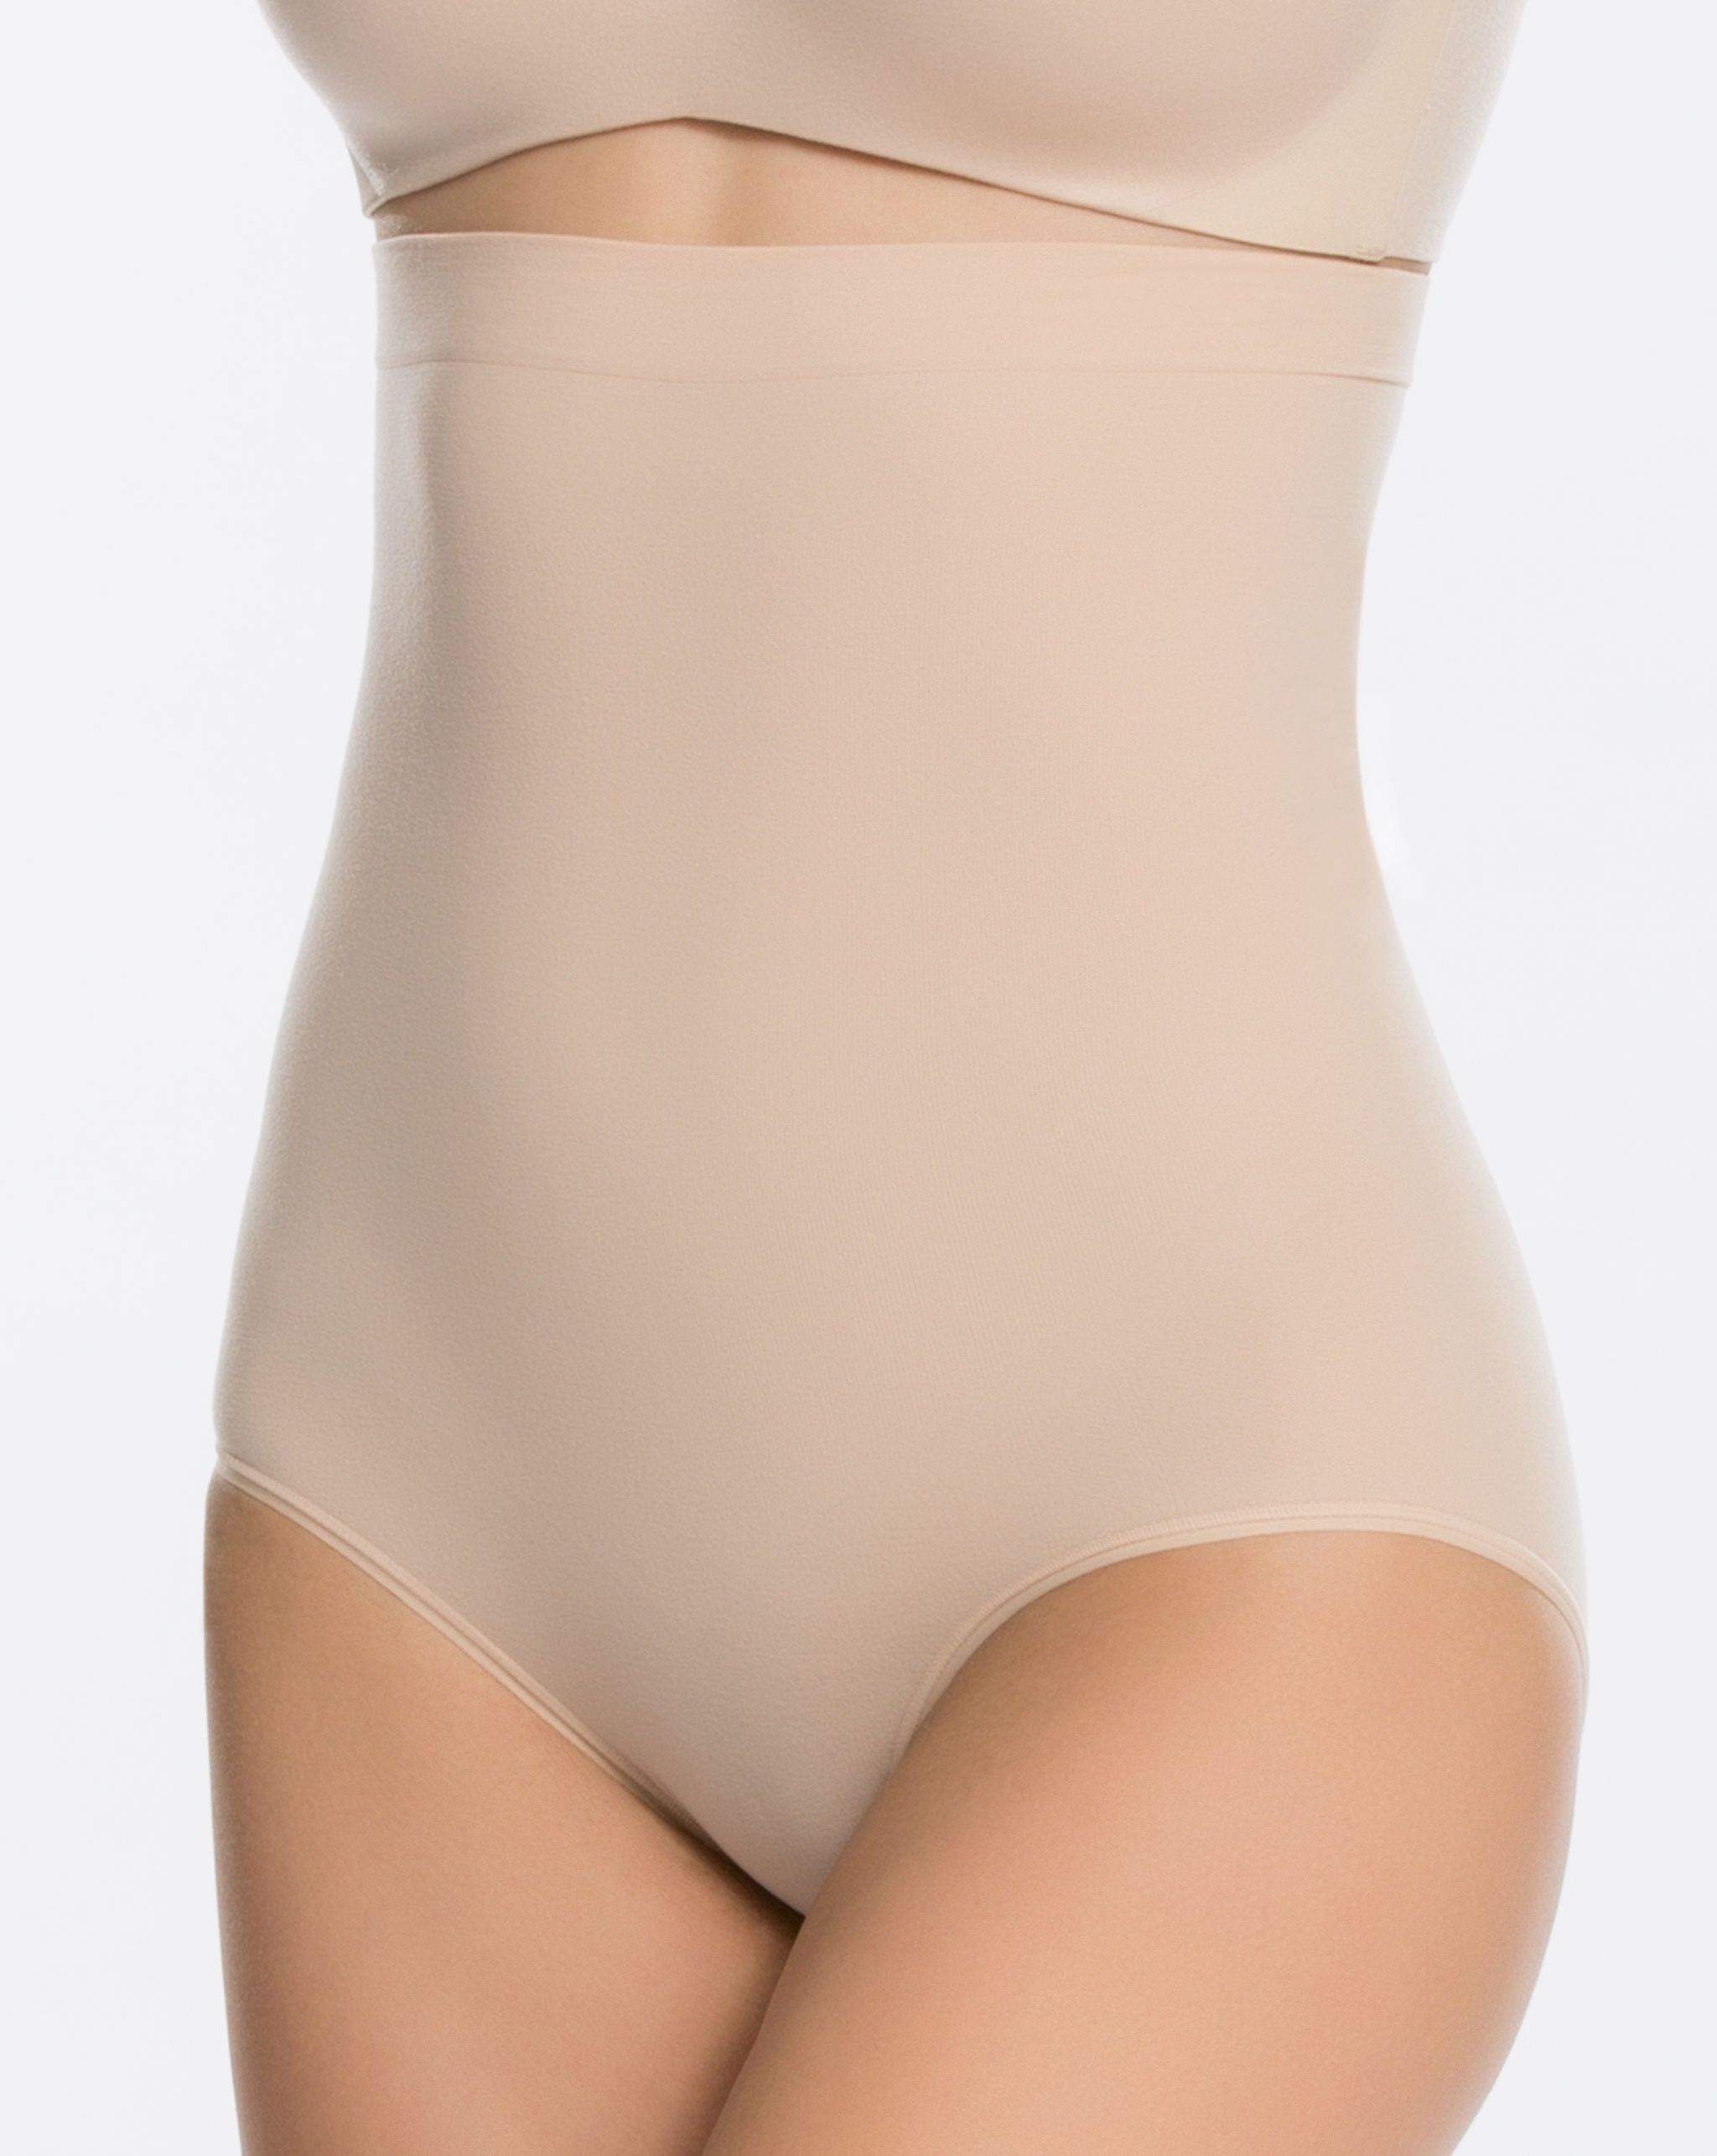 Spanx Power Panty Performance Underwear Size E 190-265 lbs. Bare - NIP